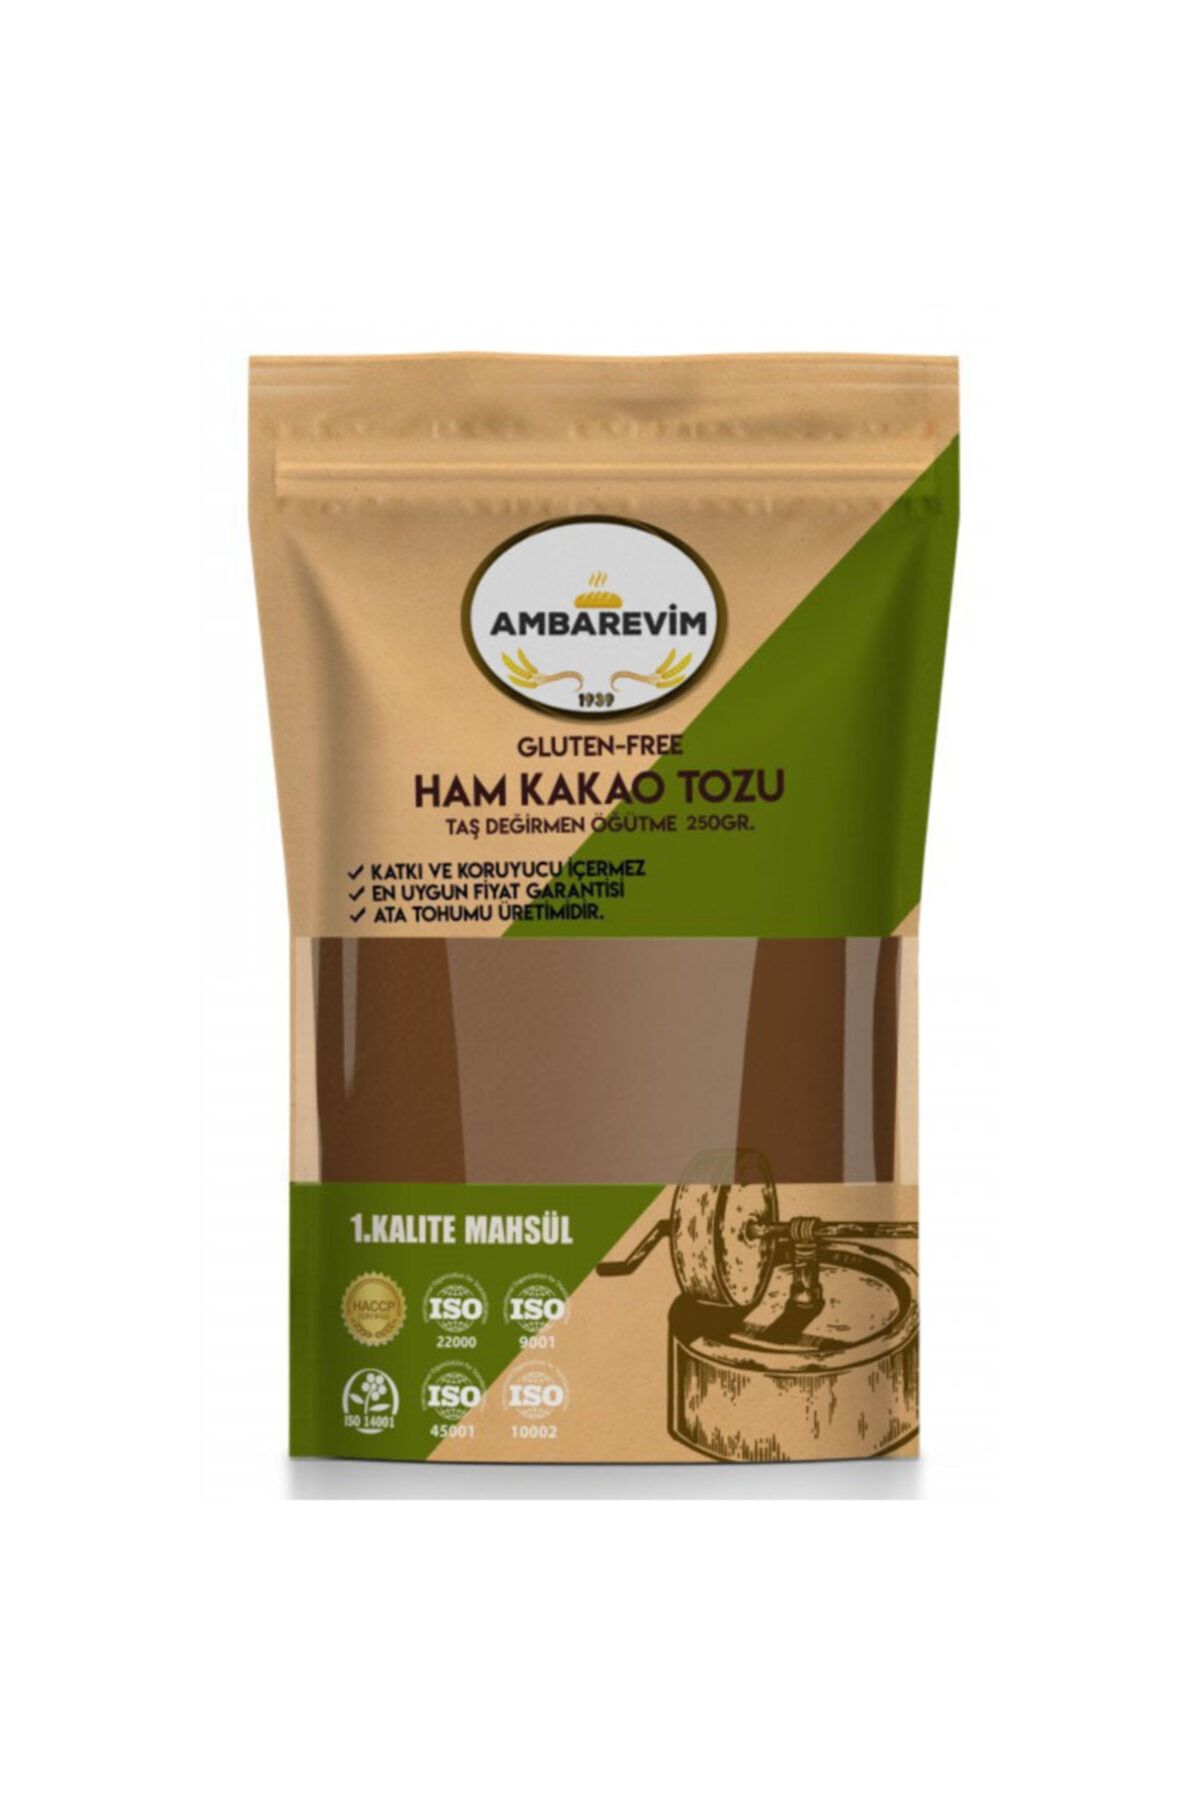 Ambarevim Ham Kakao Tozu 200 gr Glutensiz 1. Kalite